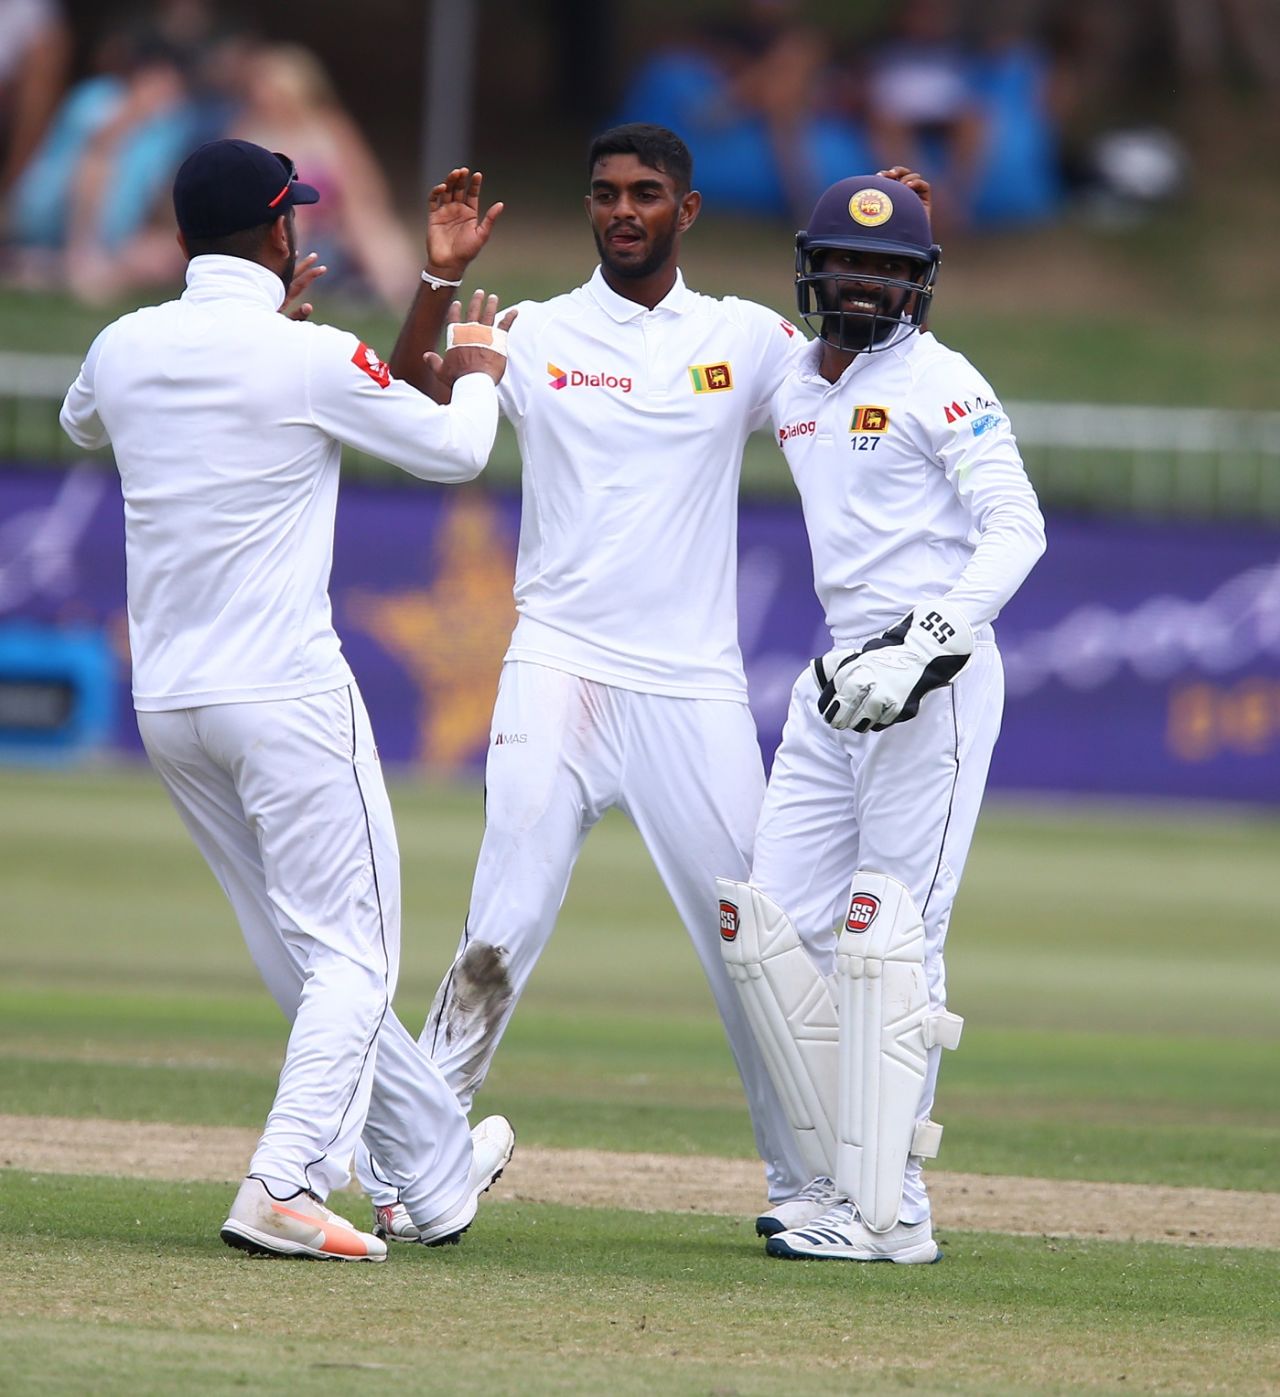 Lasith Embuldeniya celebrates with his team-mates, South Africa v Sri Lanka, 1st Test, Durban, 3rd day, February 15, 2019